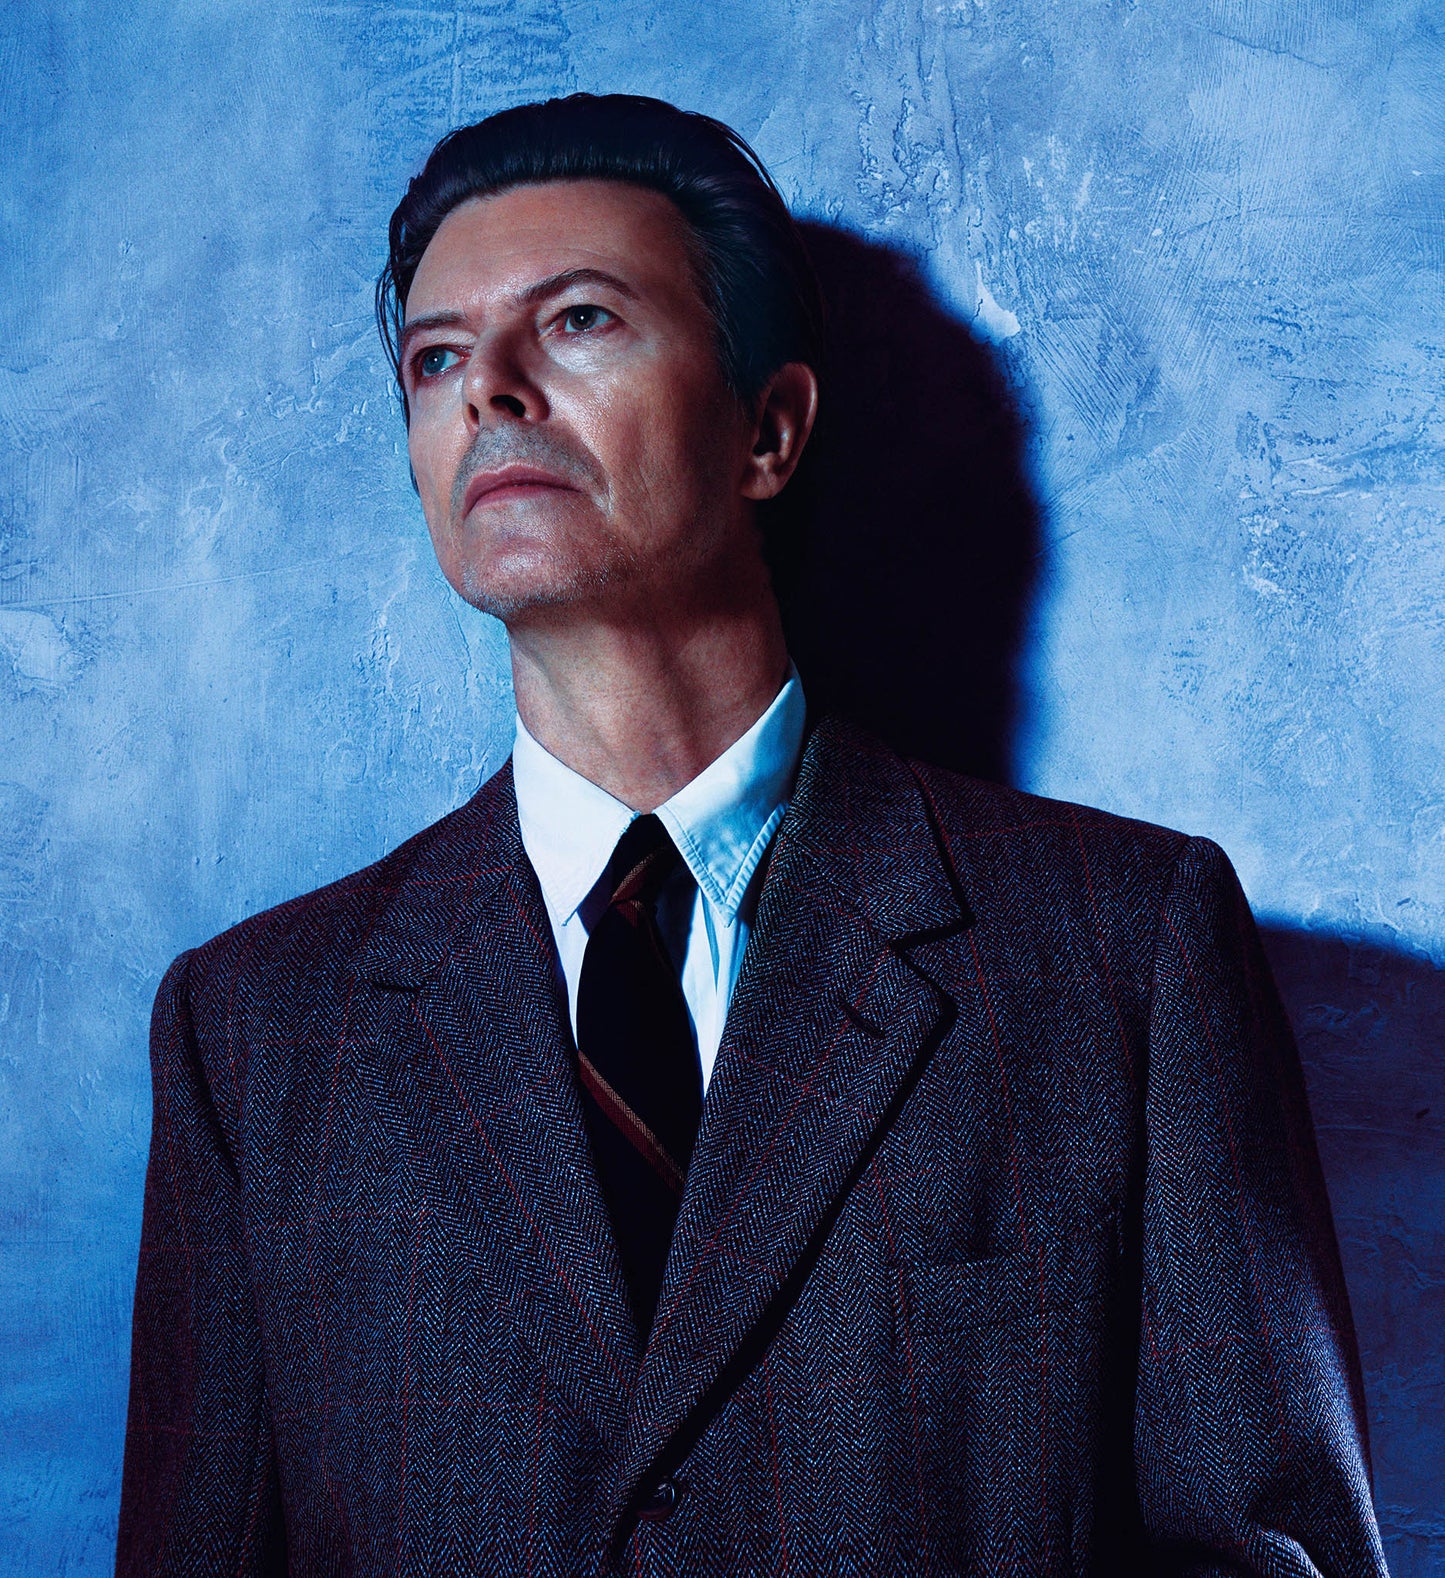 David Bowie, The Vision, 2001 by Markus Klinko